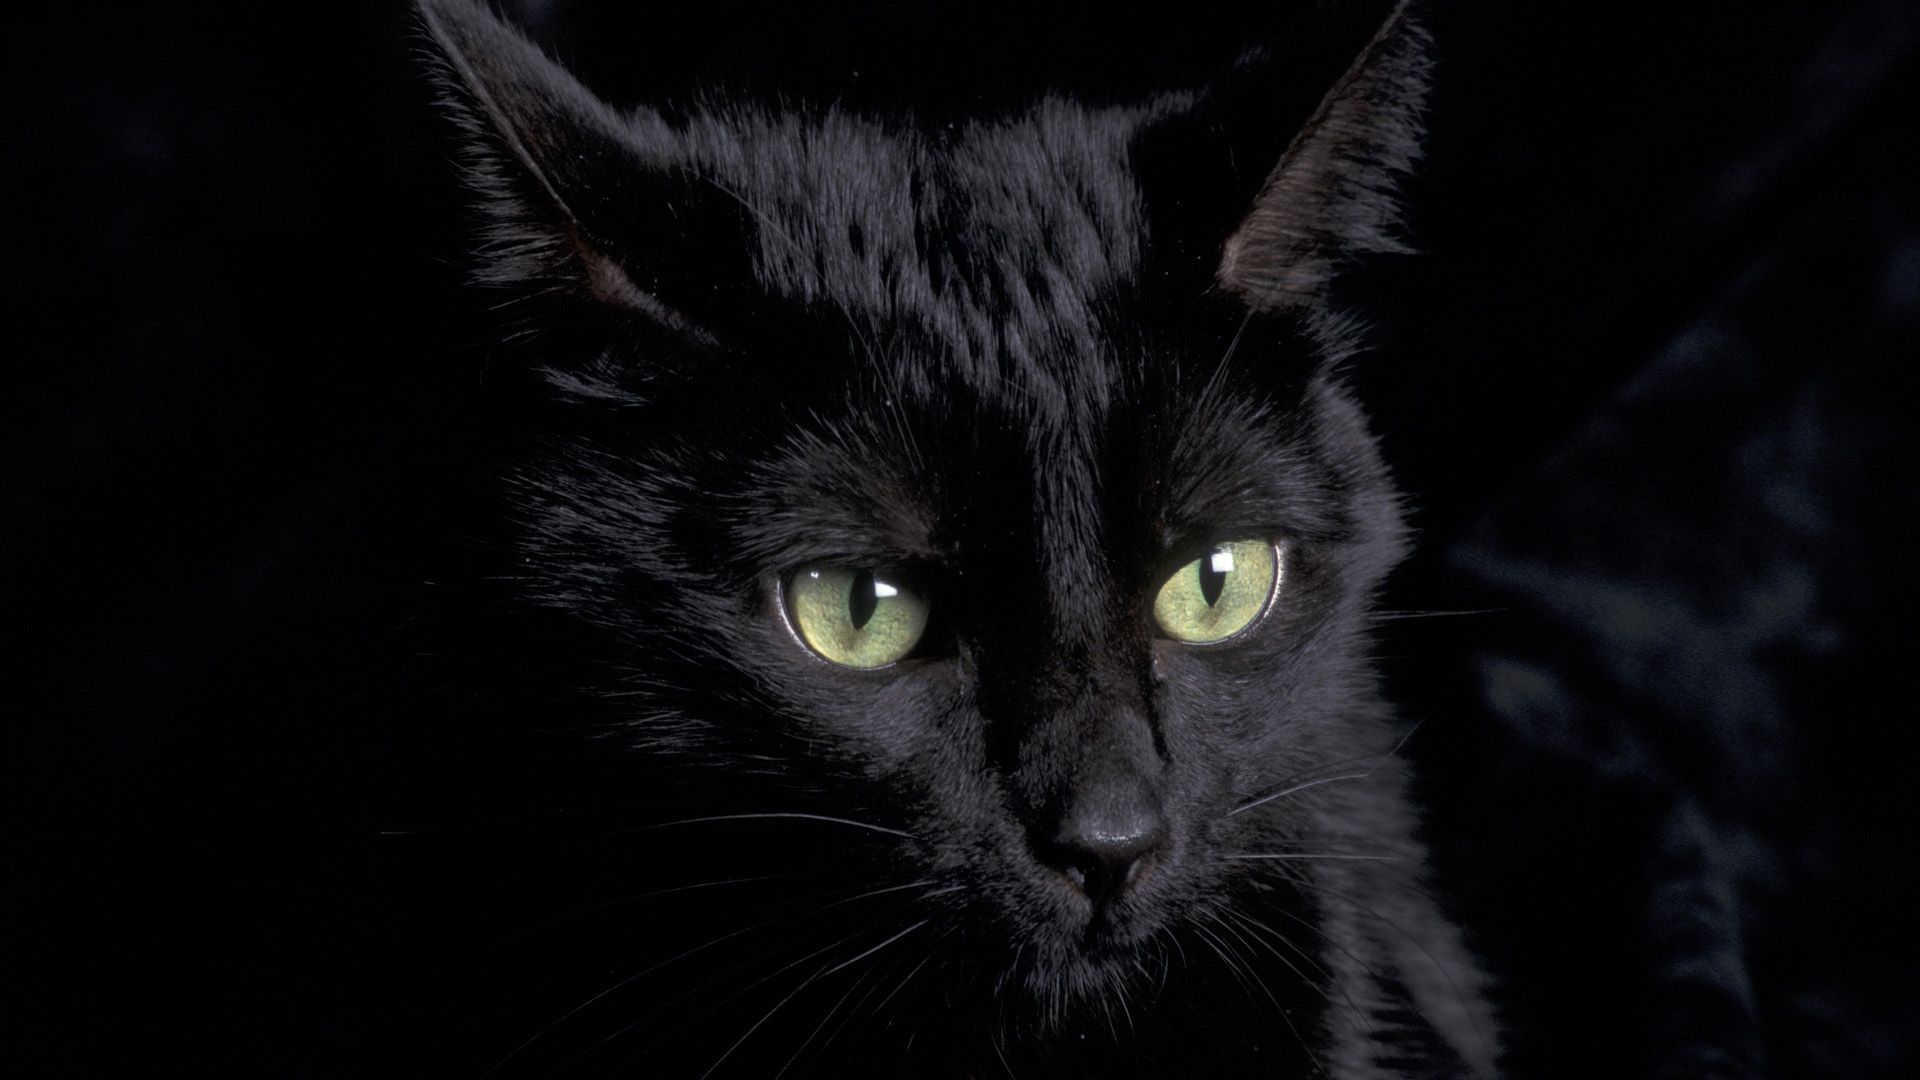 Little Brian. Cat wallpaper, Cute black cats, Cats and kittens